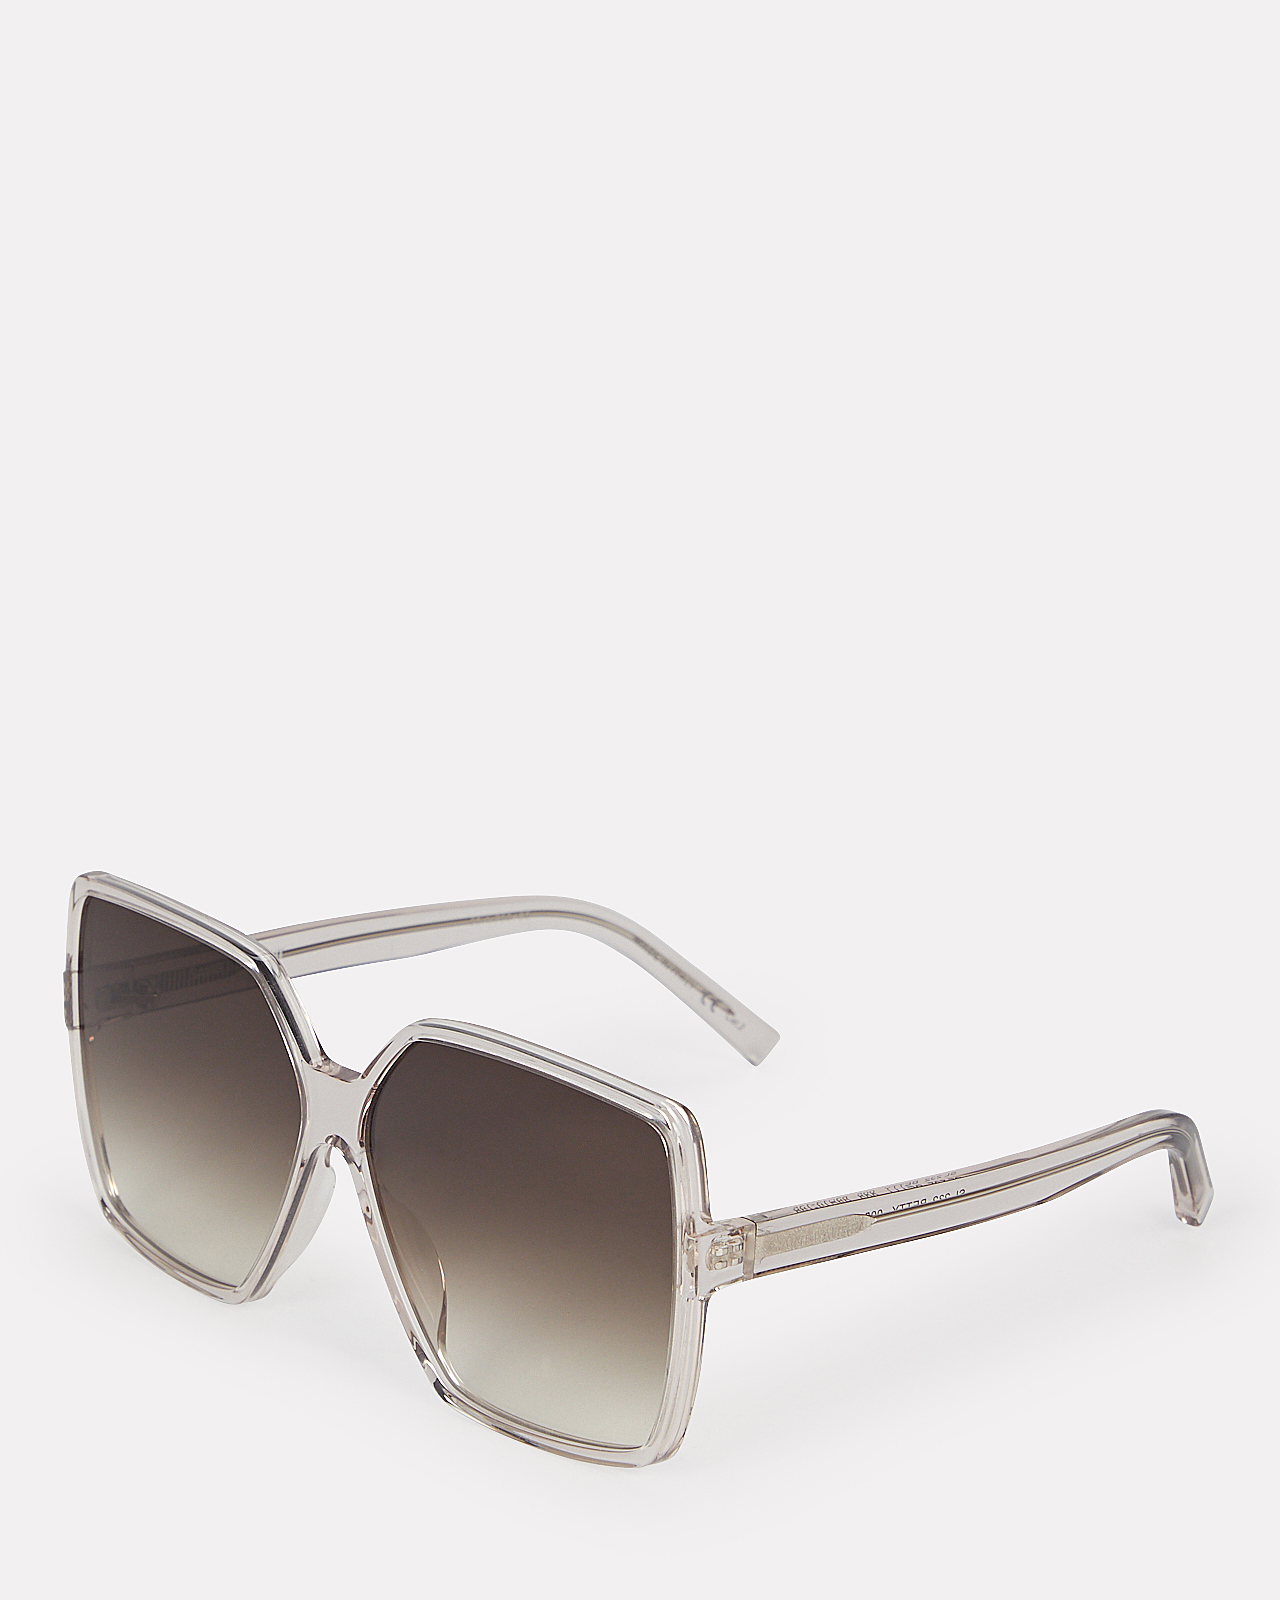 Saint Laurent Betty Oversized Square Sunglasses Intermix®